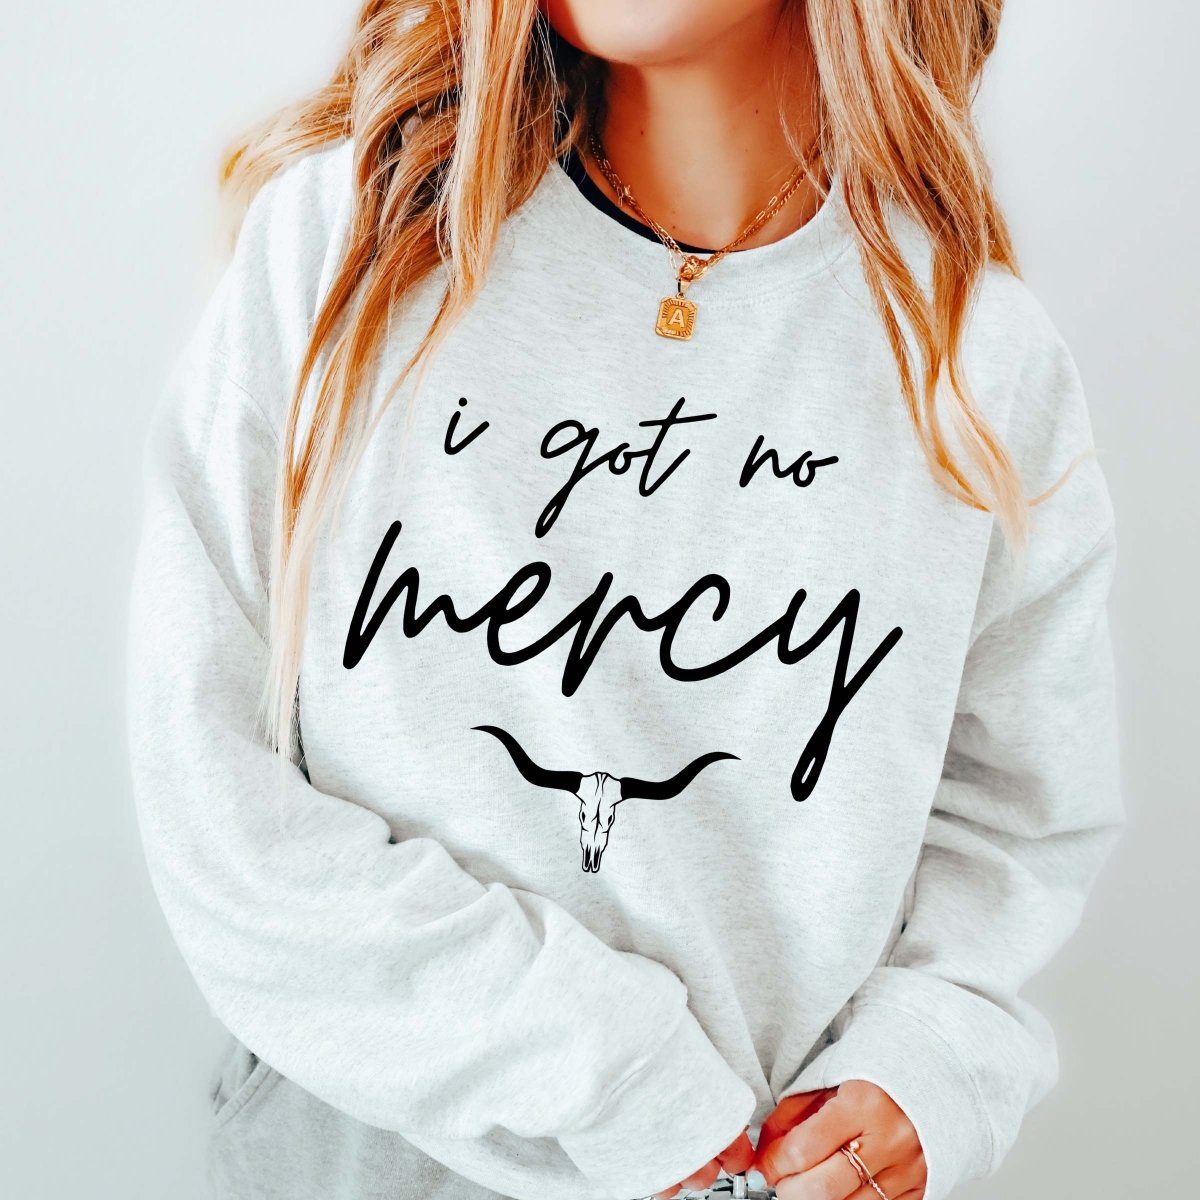 I Got No Mercy Sweatshirt - Limeberry Designs